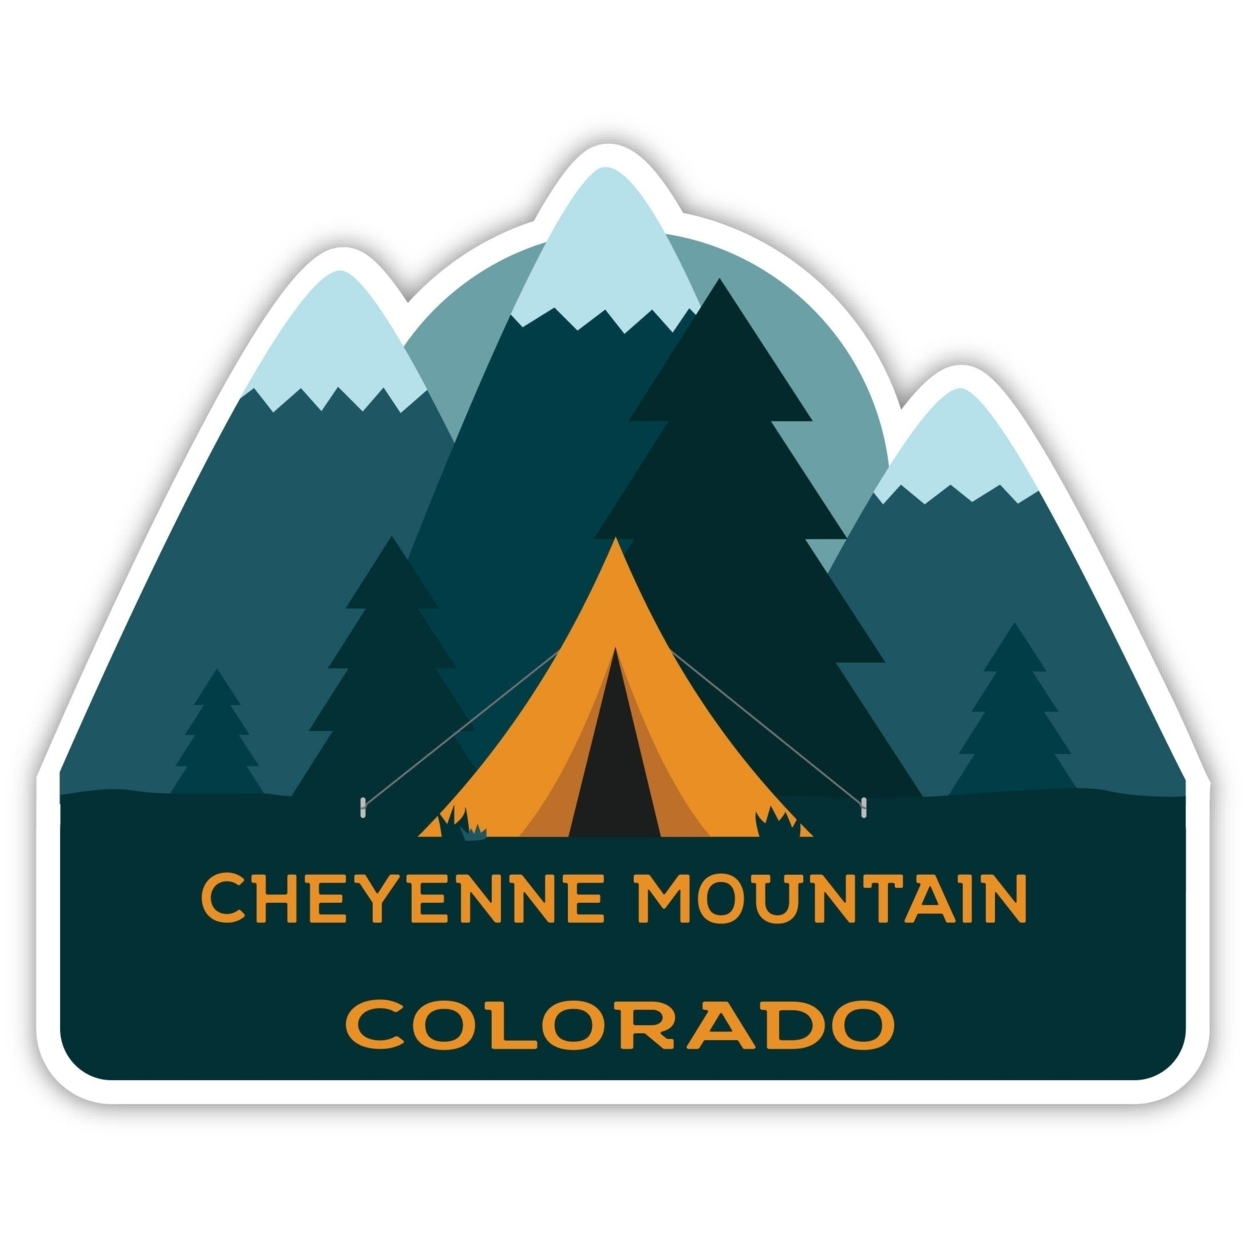 Cheyenne Mountain Colorado Souvenir Decorative Stickers (Choose Theme And Size) - Single Unit, 4-Inch, Tent